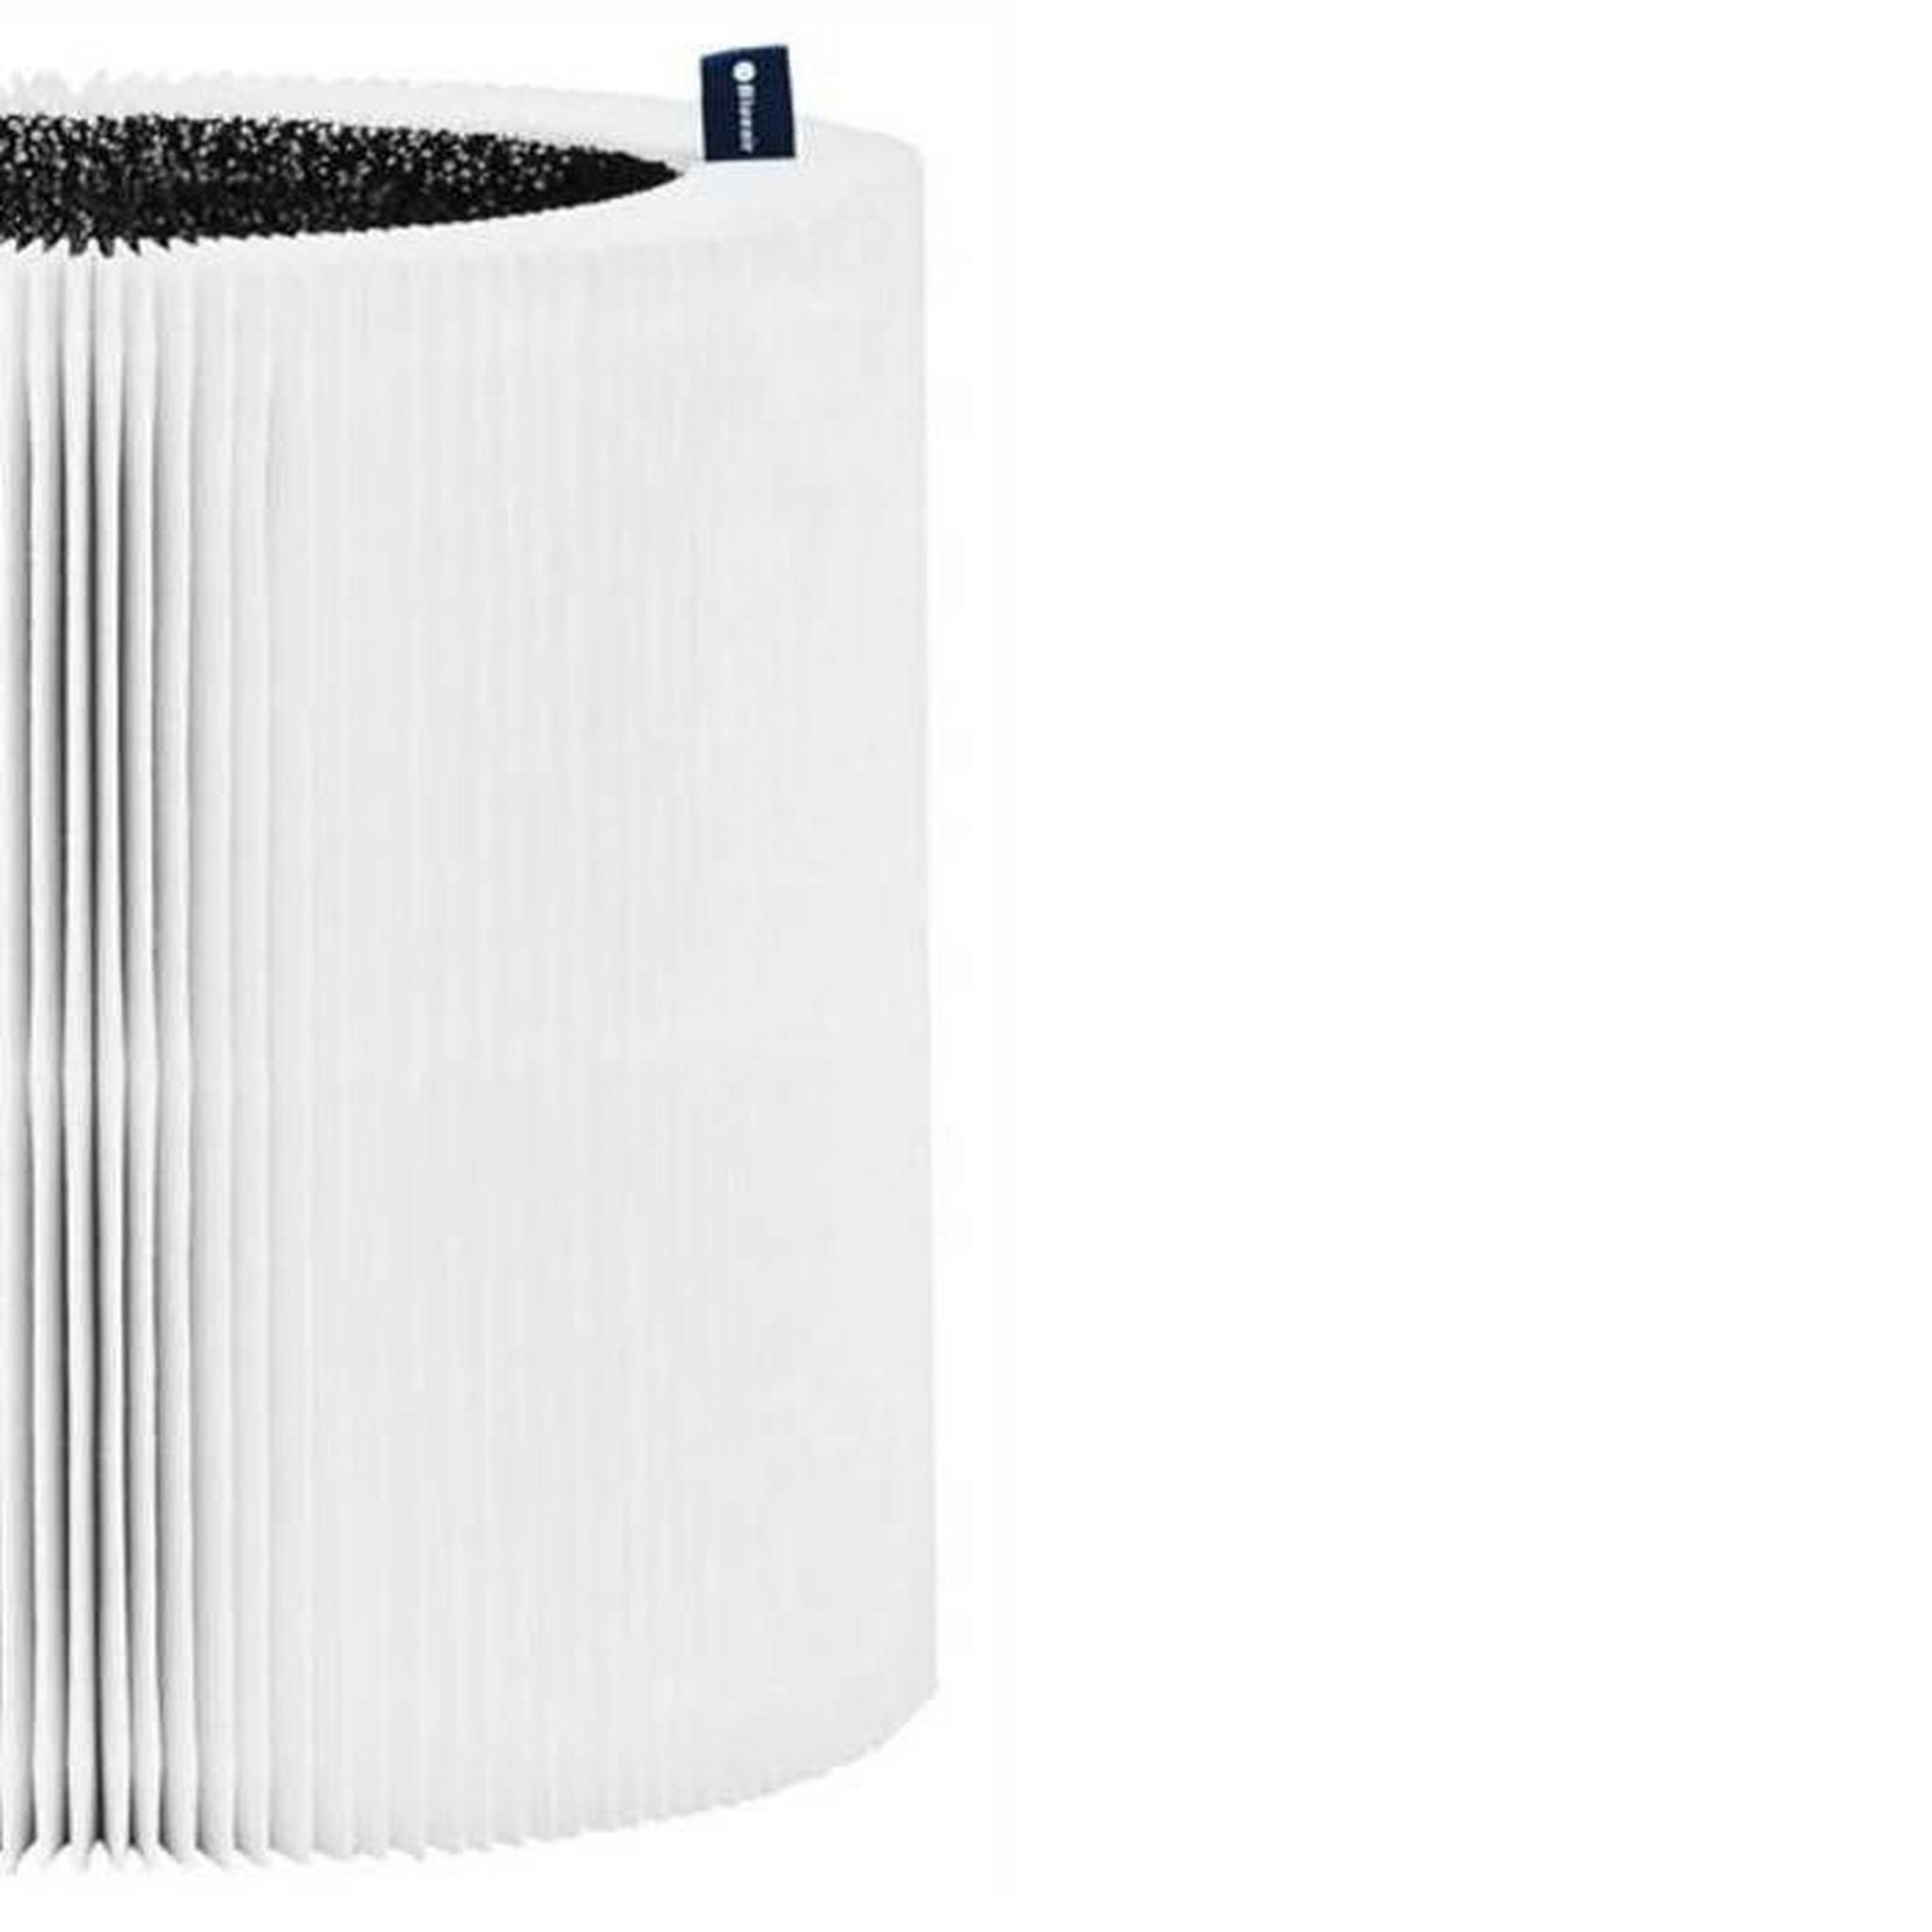 Blueair Particle + Carbon Filter For Air Purifier 3250, 110410